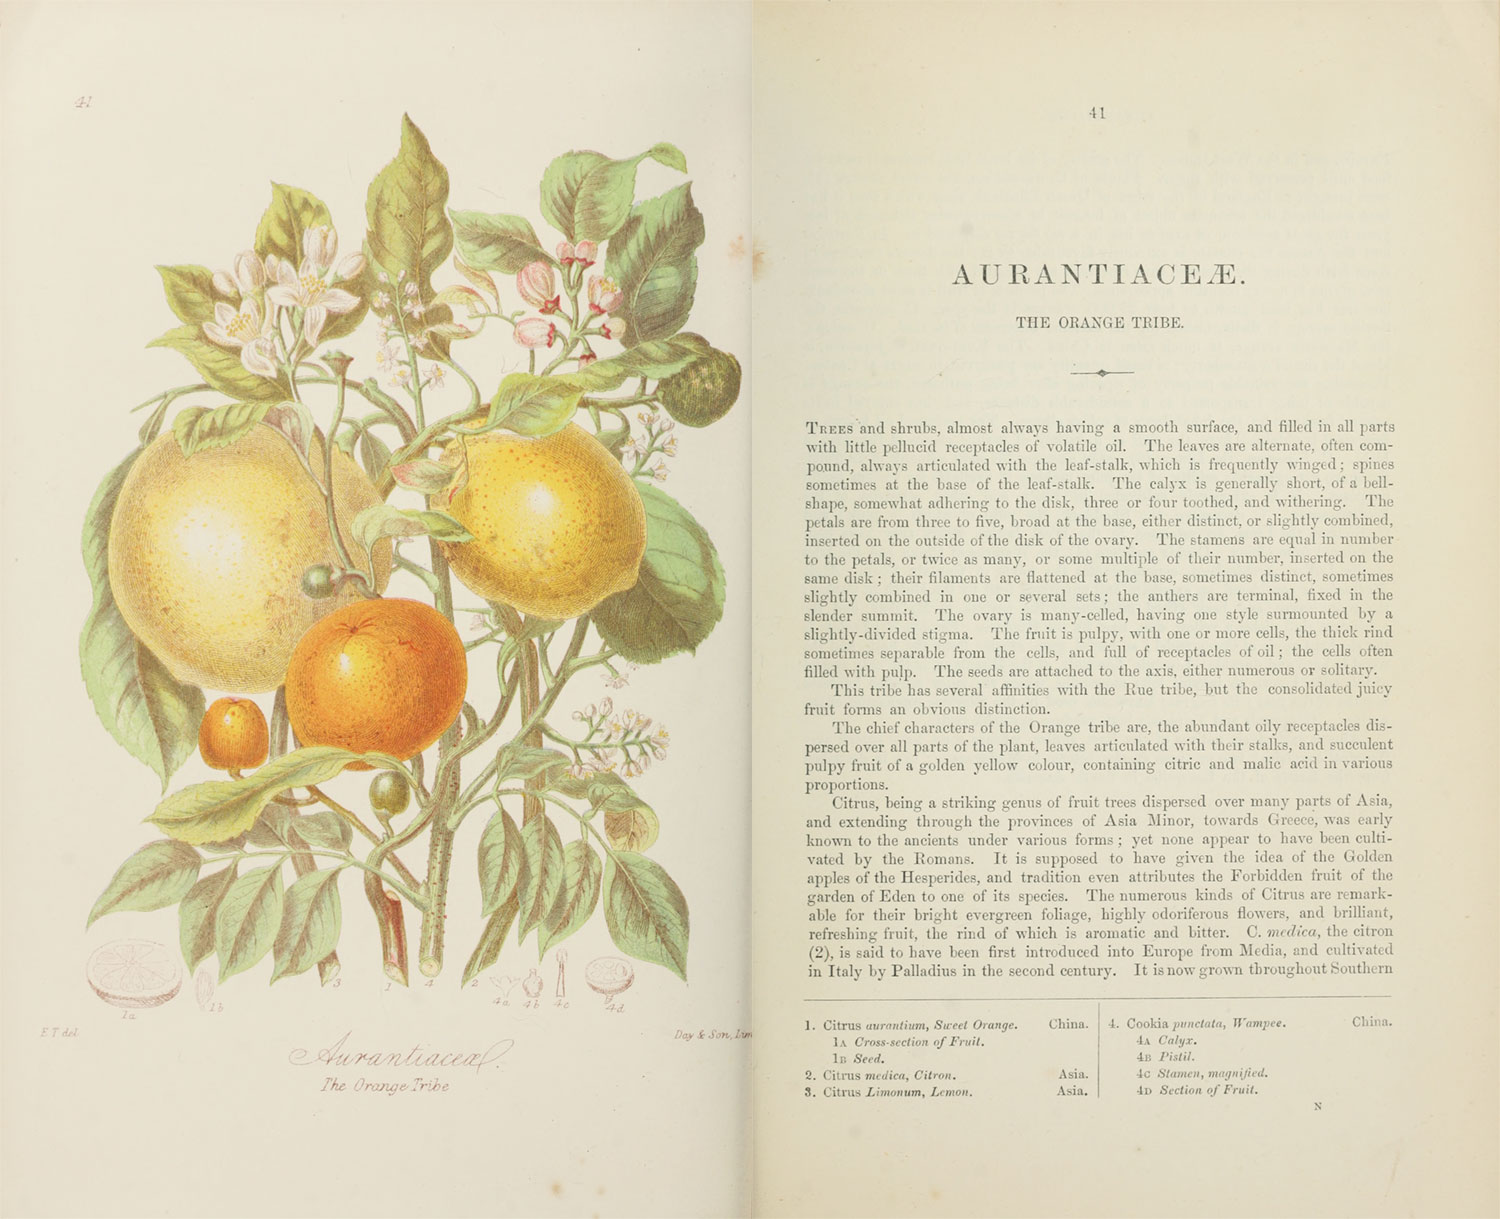 Scans of the original illustration and description of Aurantaitaceæ, the Orange Tribe